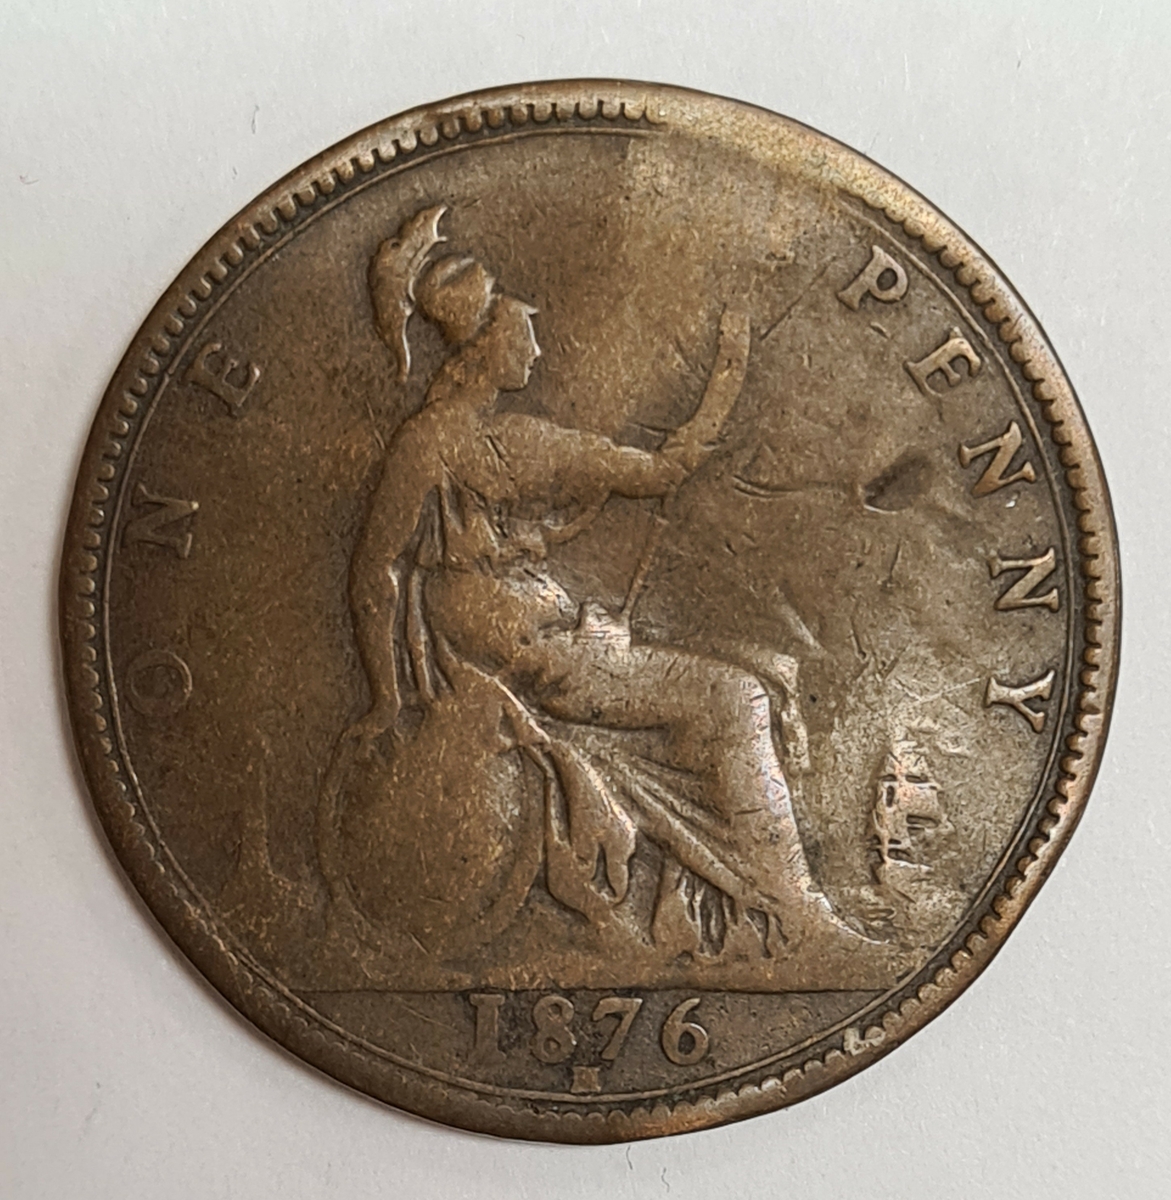 5 mynt från Storbritanien.
1 Penny, 1860
1 Penny, 1861
1 Penny, 1862
1 Penny, 1876
1 Penny, 1889